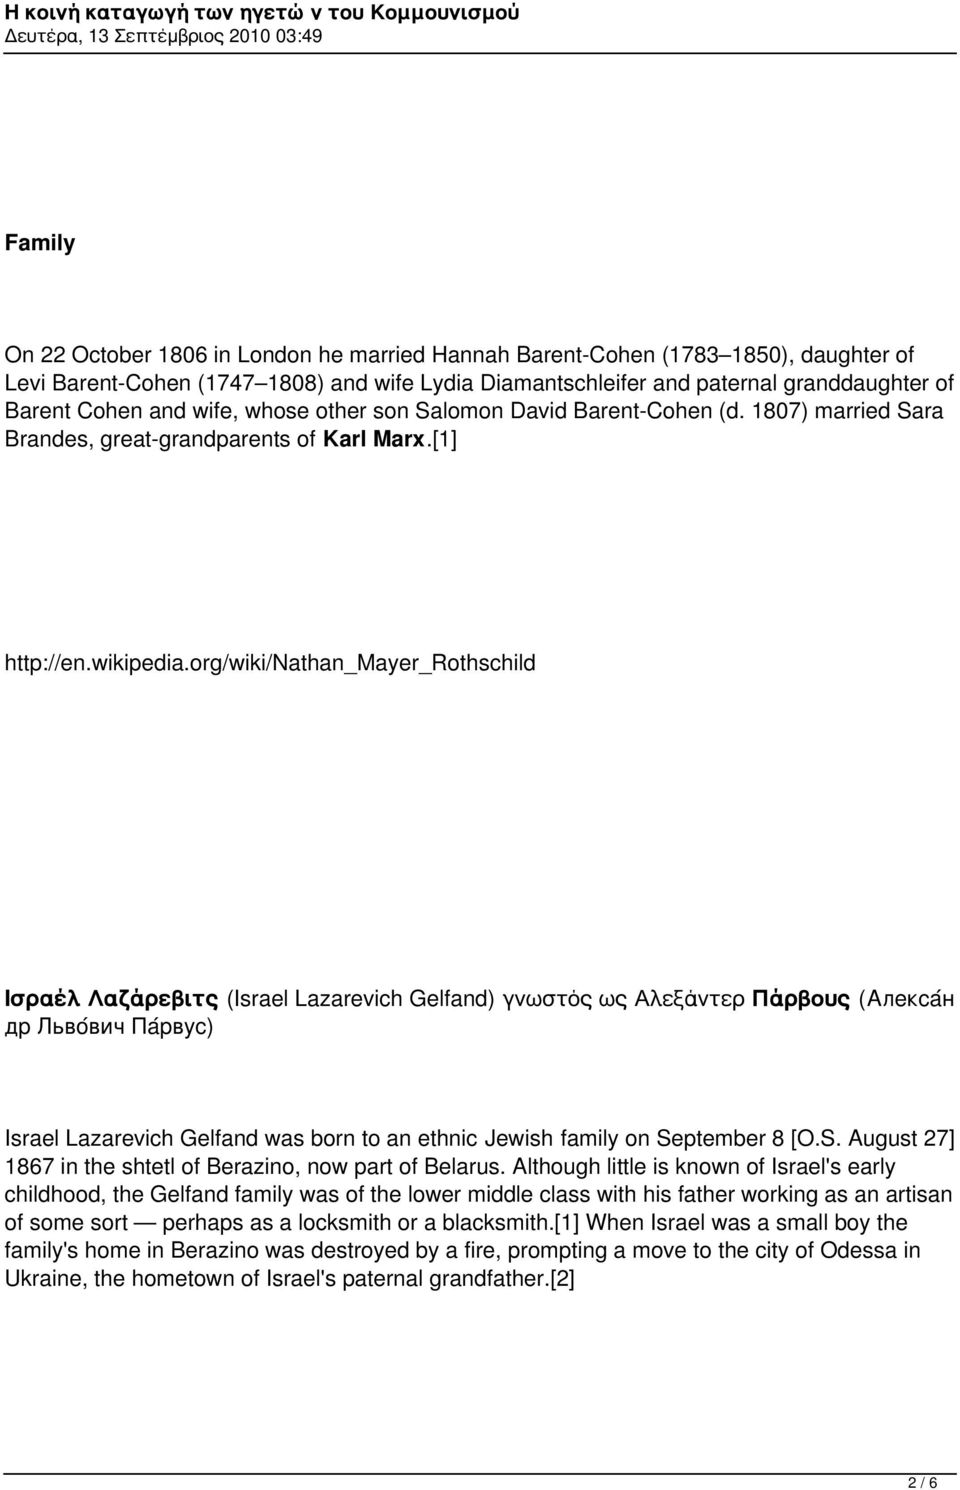 org/wiki/nathan_mayer_rothschild Ισραέλ Λαζάρεβιτς (Israel Lazarevich Gelfand) γνωστός ως Αλεξάντερ Πάρβους (Алекса н др Льво вич Па рвус) Israel Lazarevich Gelfand was born to an ethnic Jewish